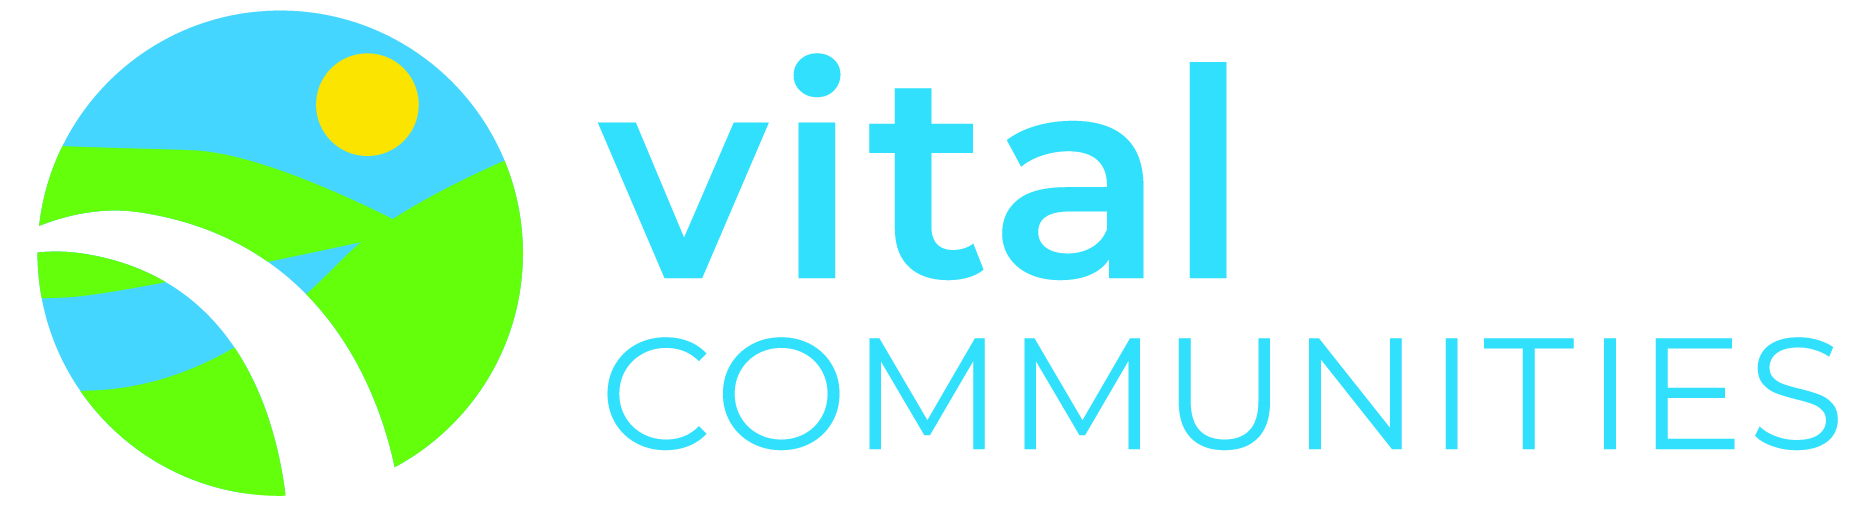 Vital Communities logo